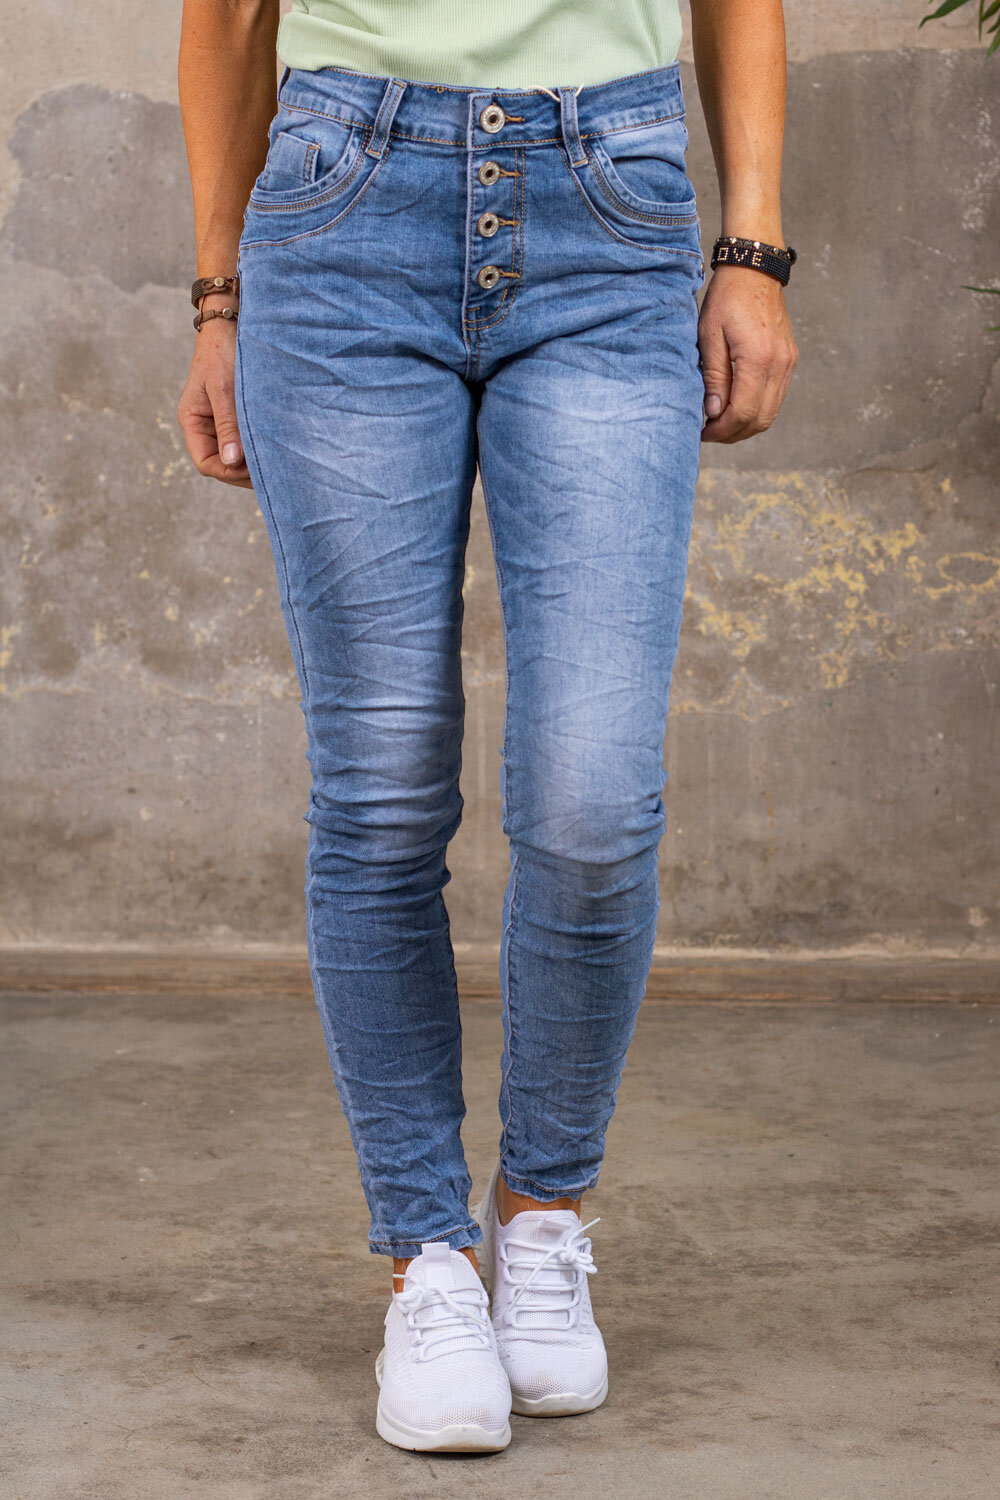 Jeans JW22115 - Ljustvätt